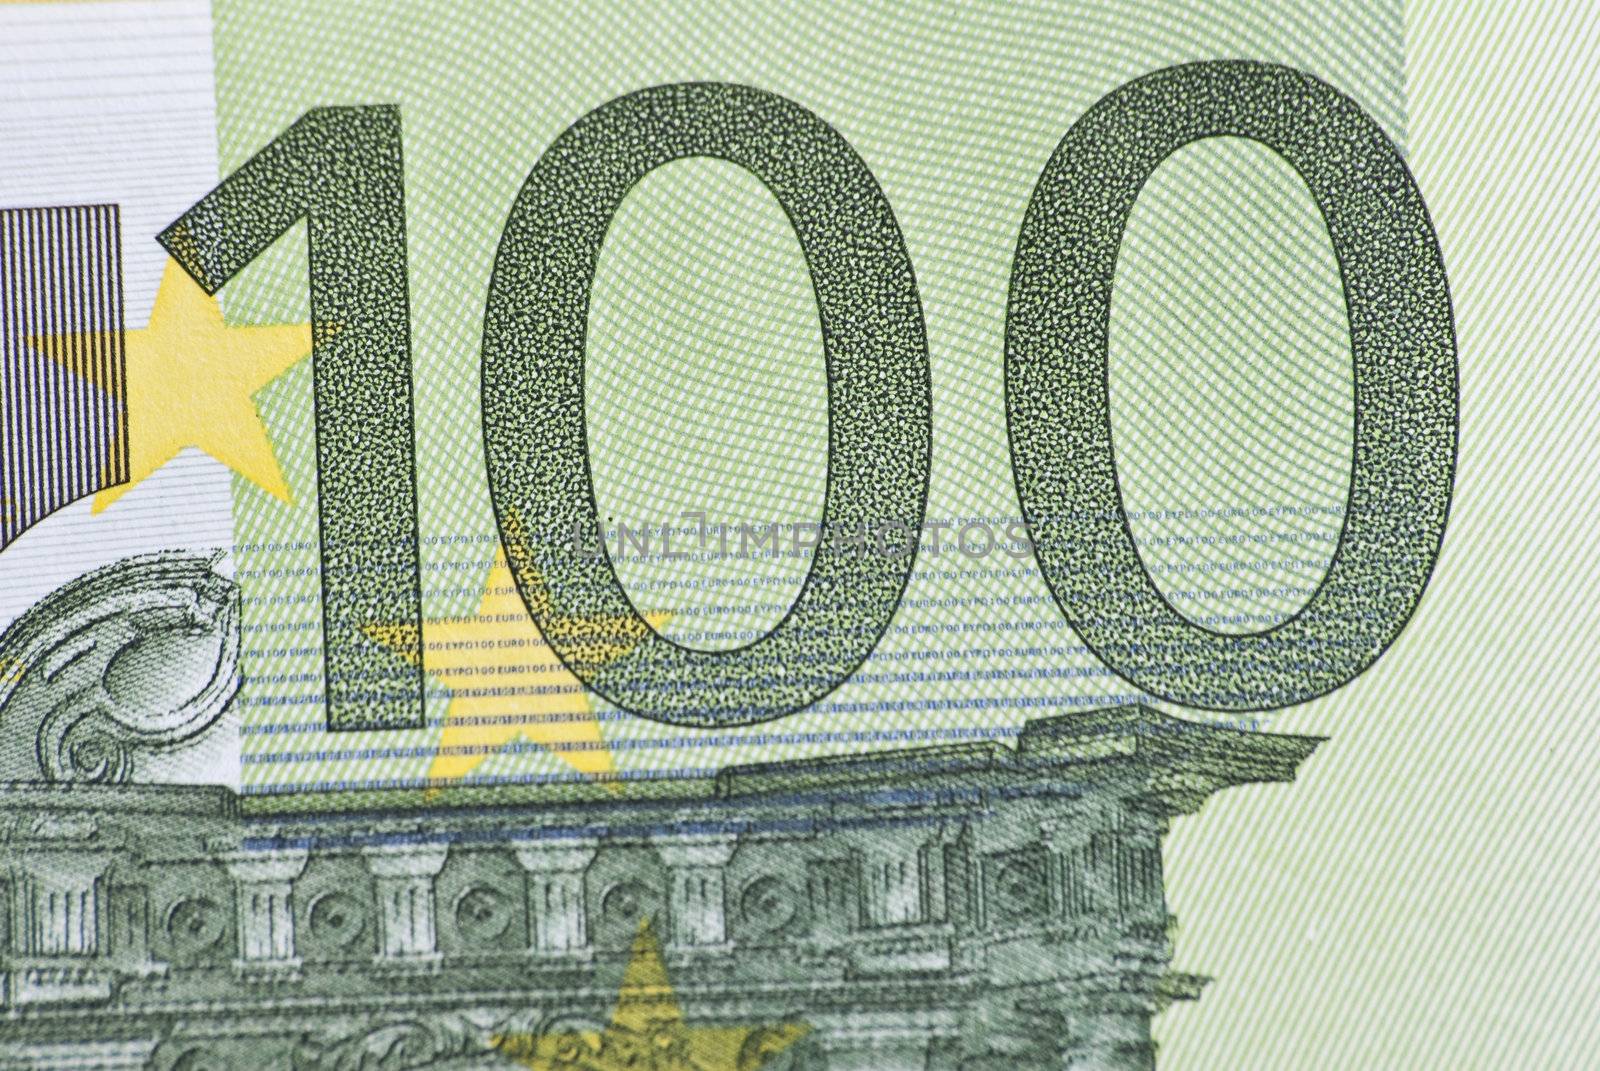 Hundred-euro bill  by adamr